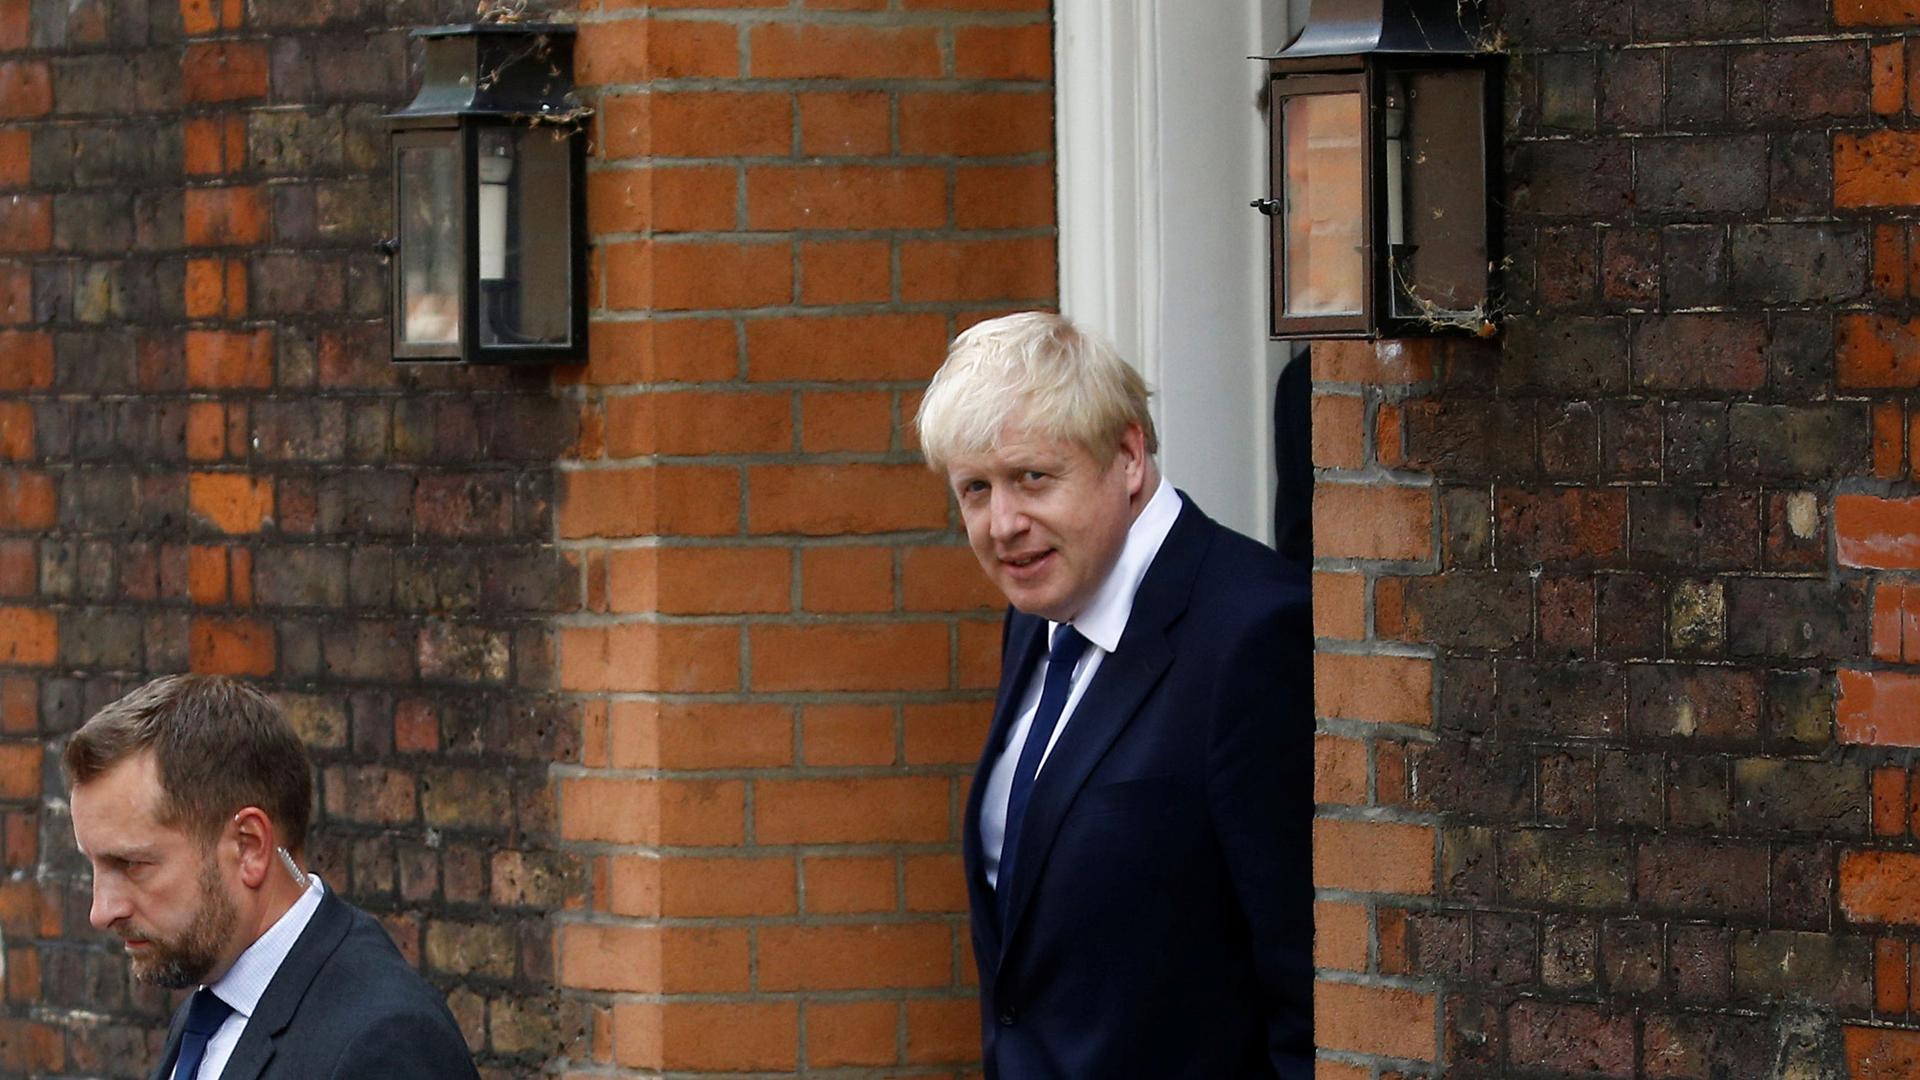 Boris Johnson is shown walking through a brick doorway wearing a blue suit.